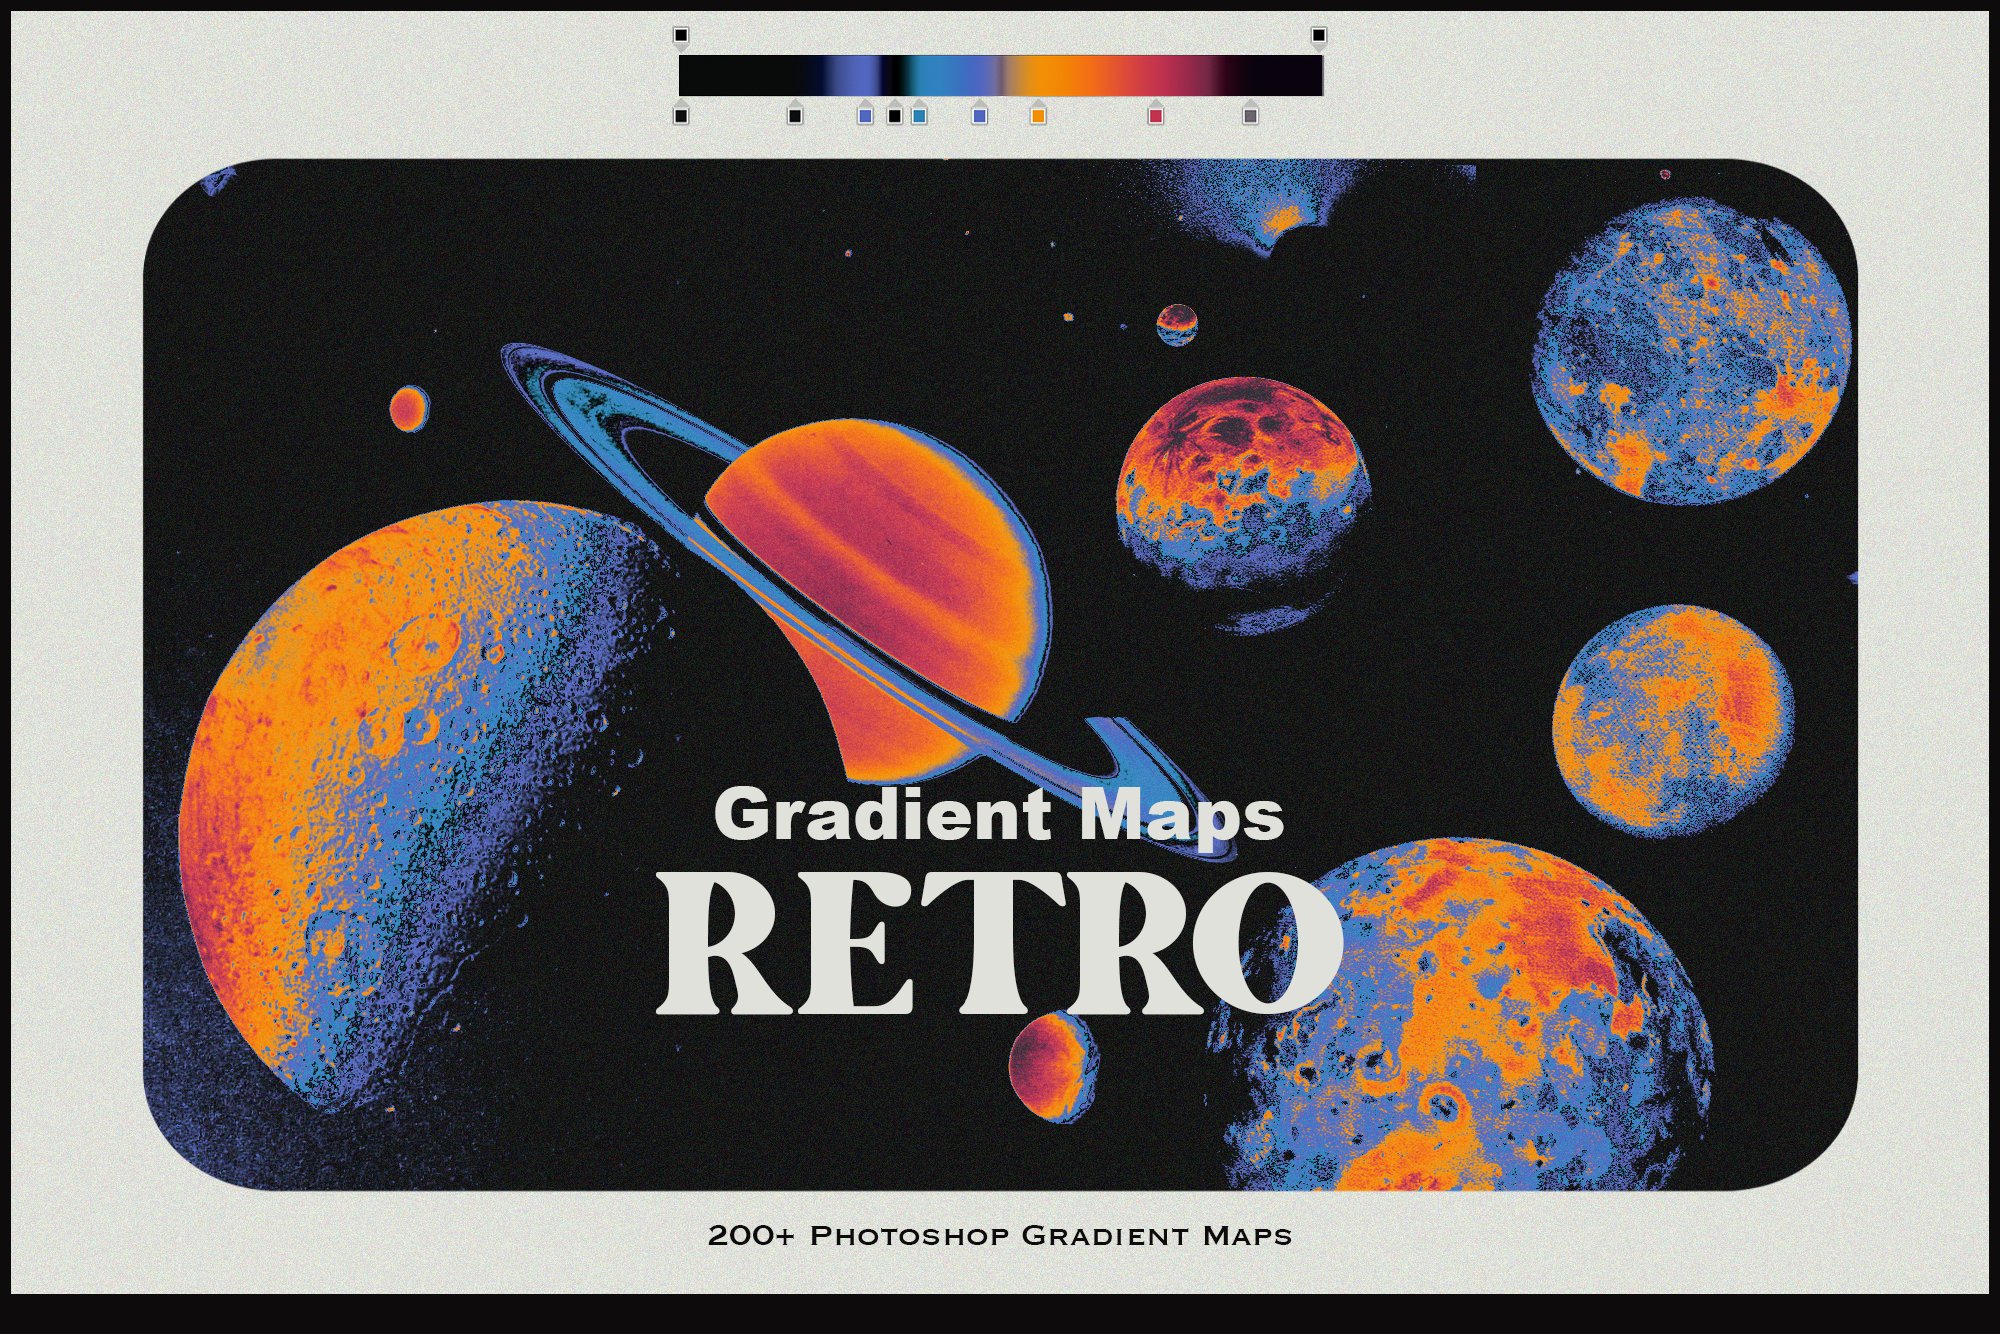 SALE! Retro Gradient Maps 200+cover image.